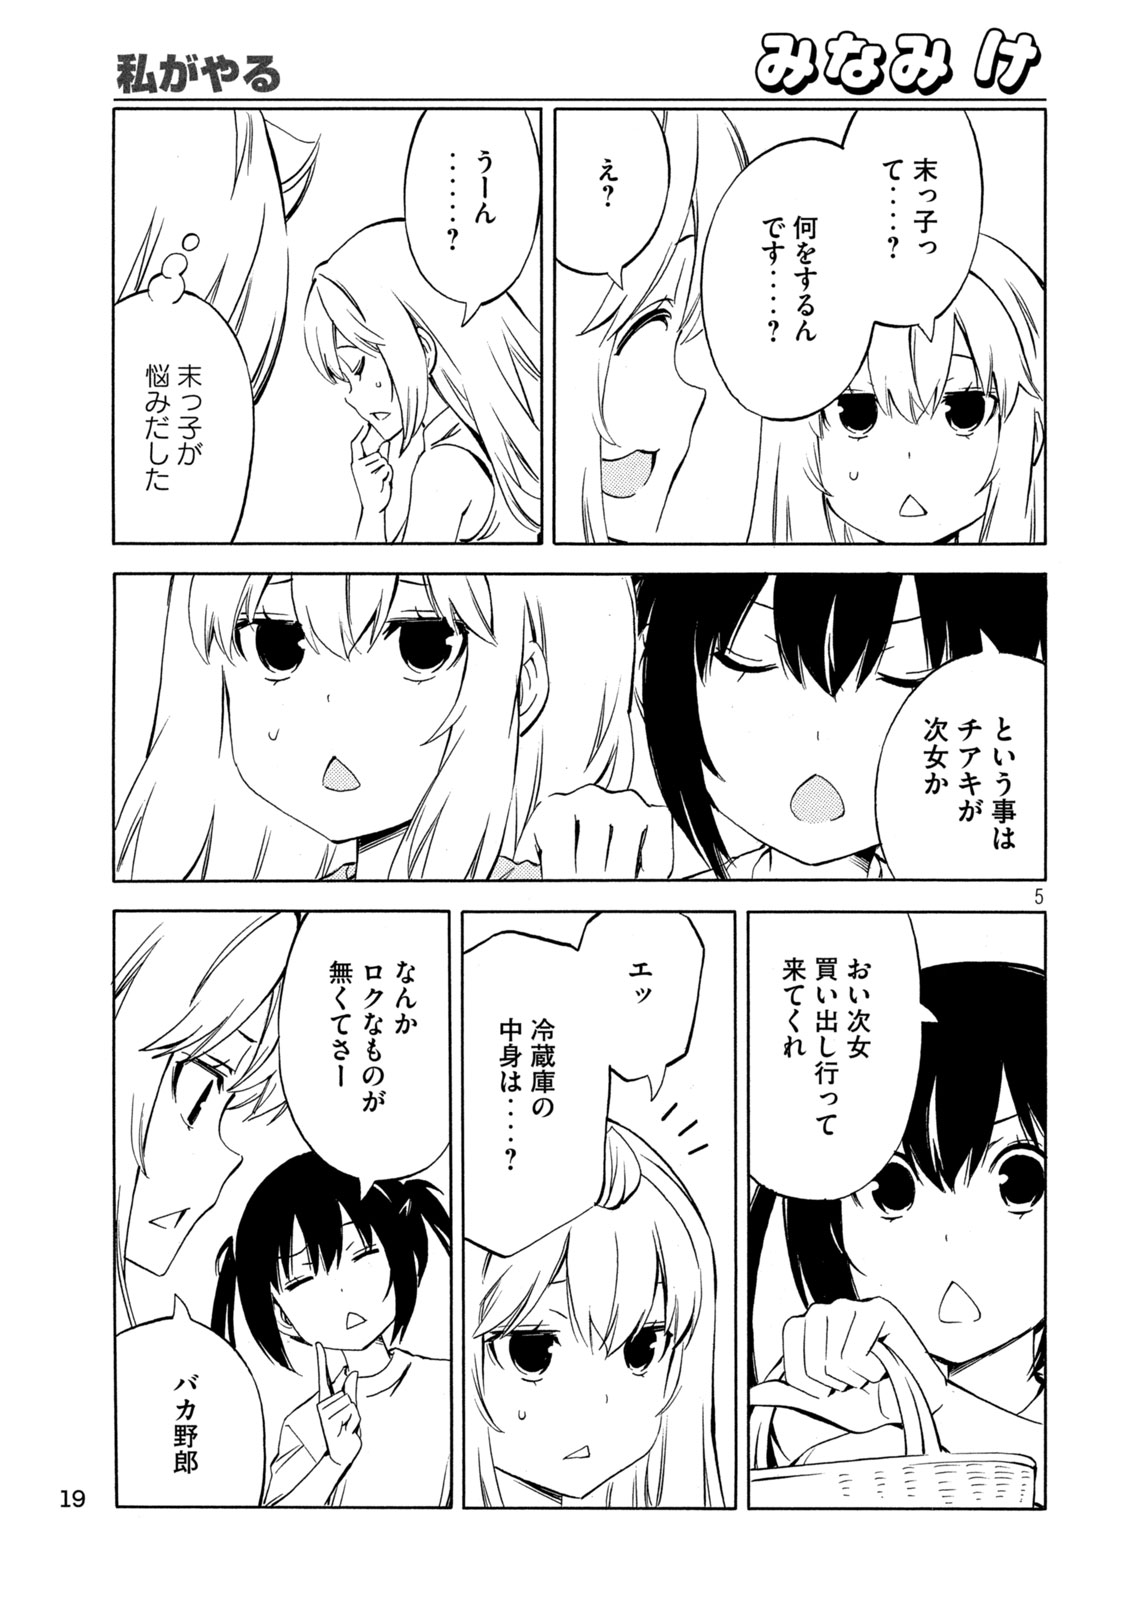 Minami-ke - Chapter 485 - Page 5